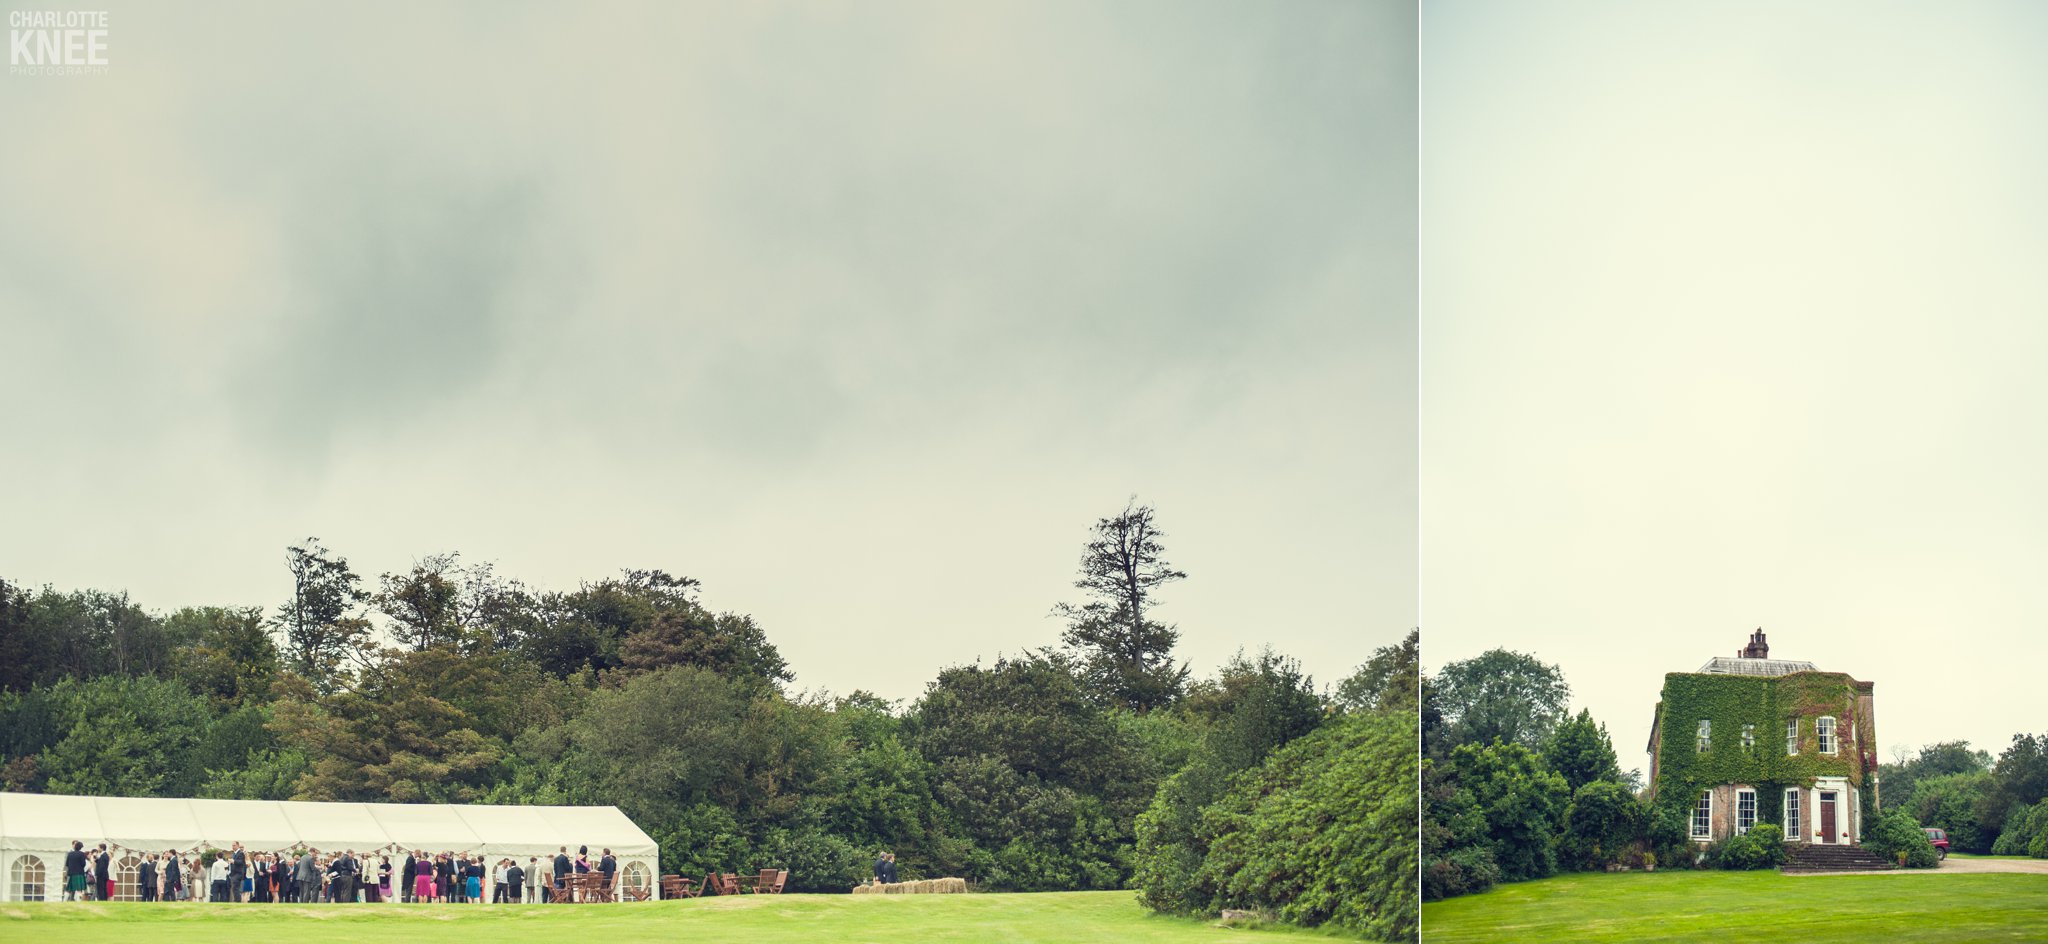 Brightling-Park-Sussex-Wedding-Charlotte-Knee-Photography_0017.jpg